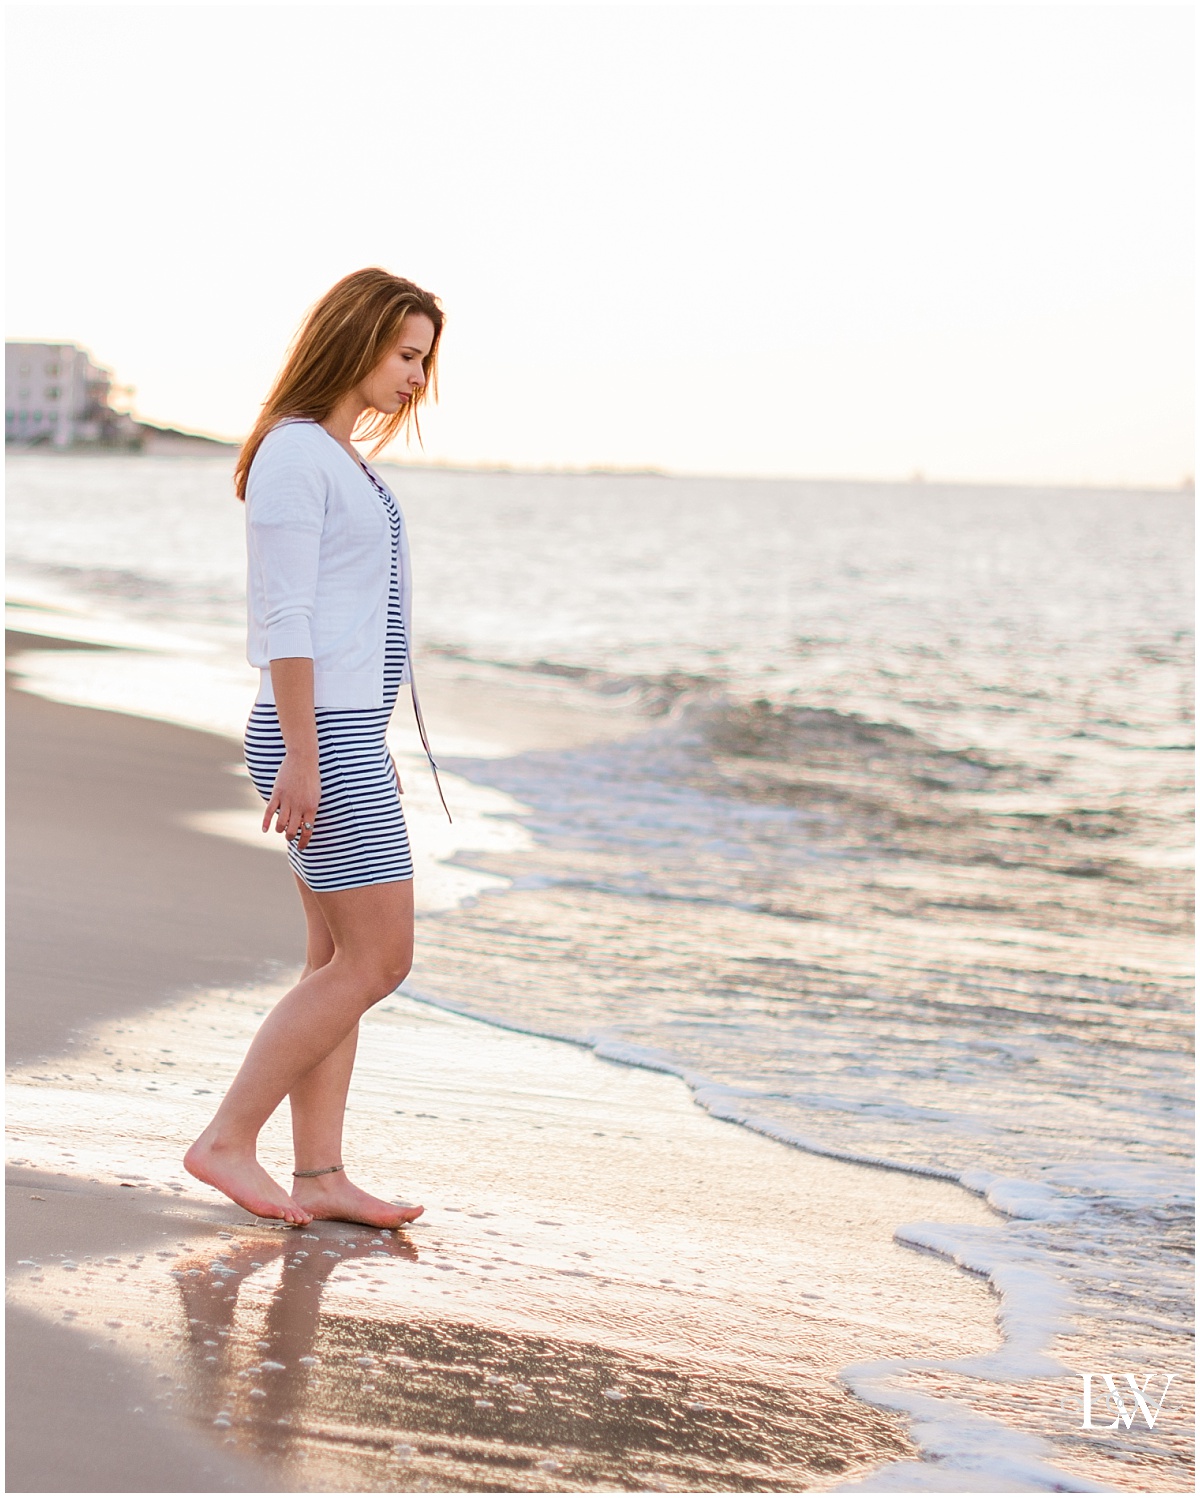 Beautiful girl at the beach | Wesleyan University Graduation in Virginia Beach by Photographer Laura Walter